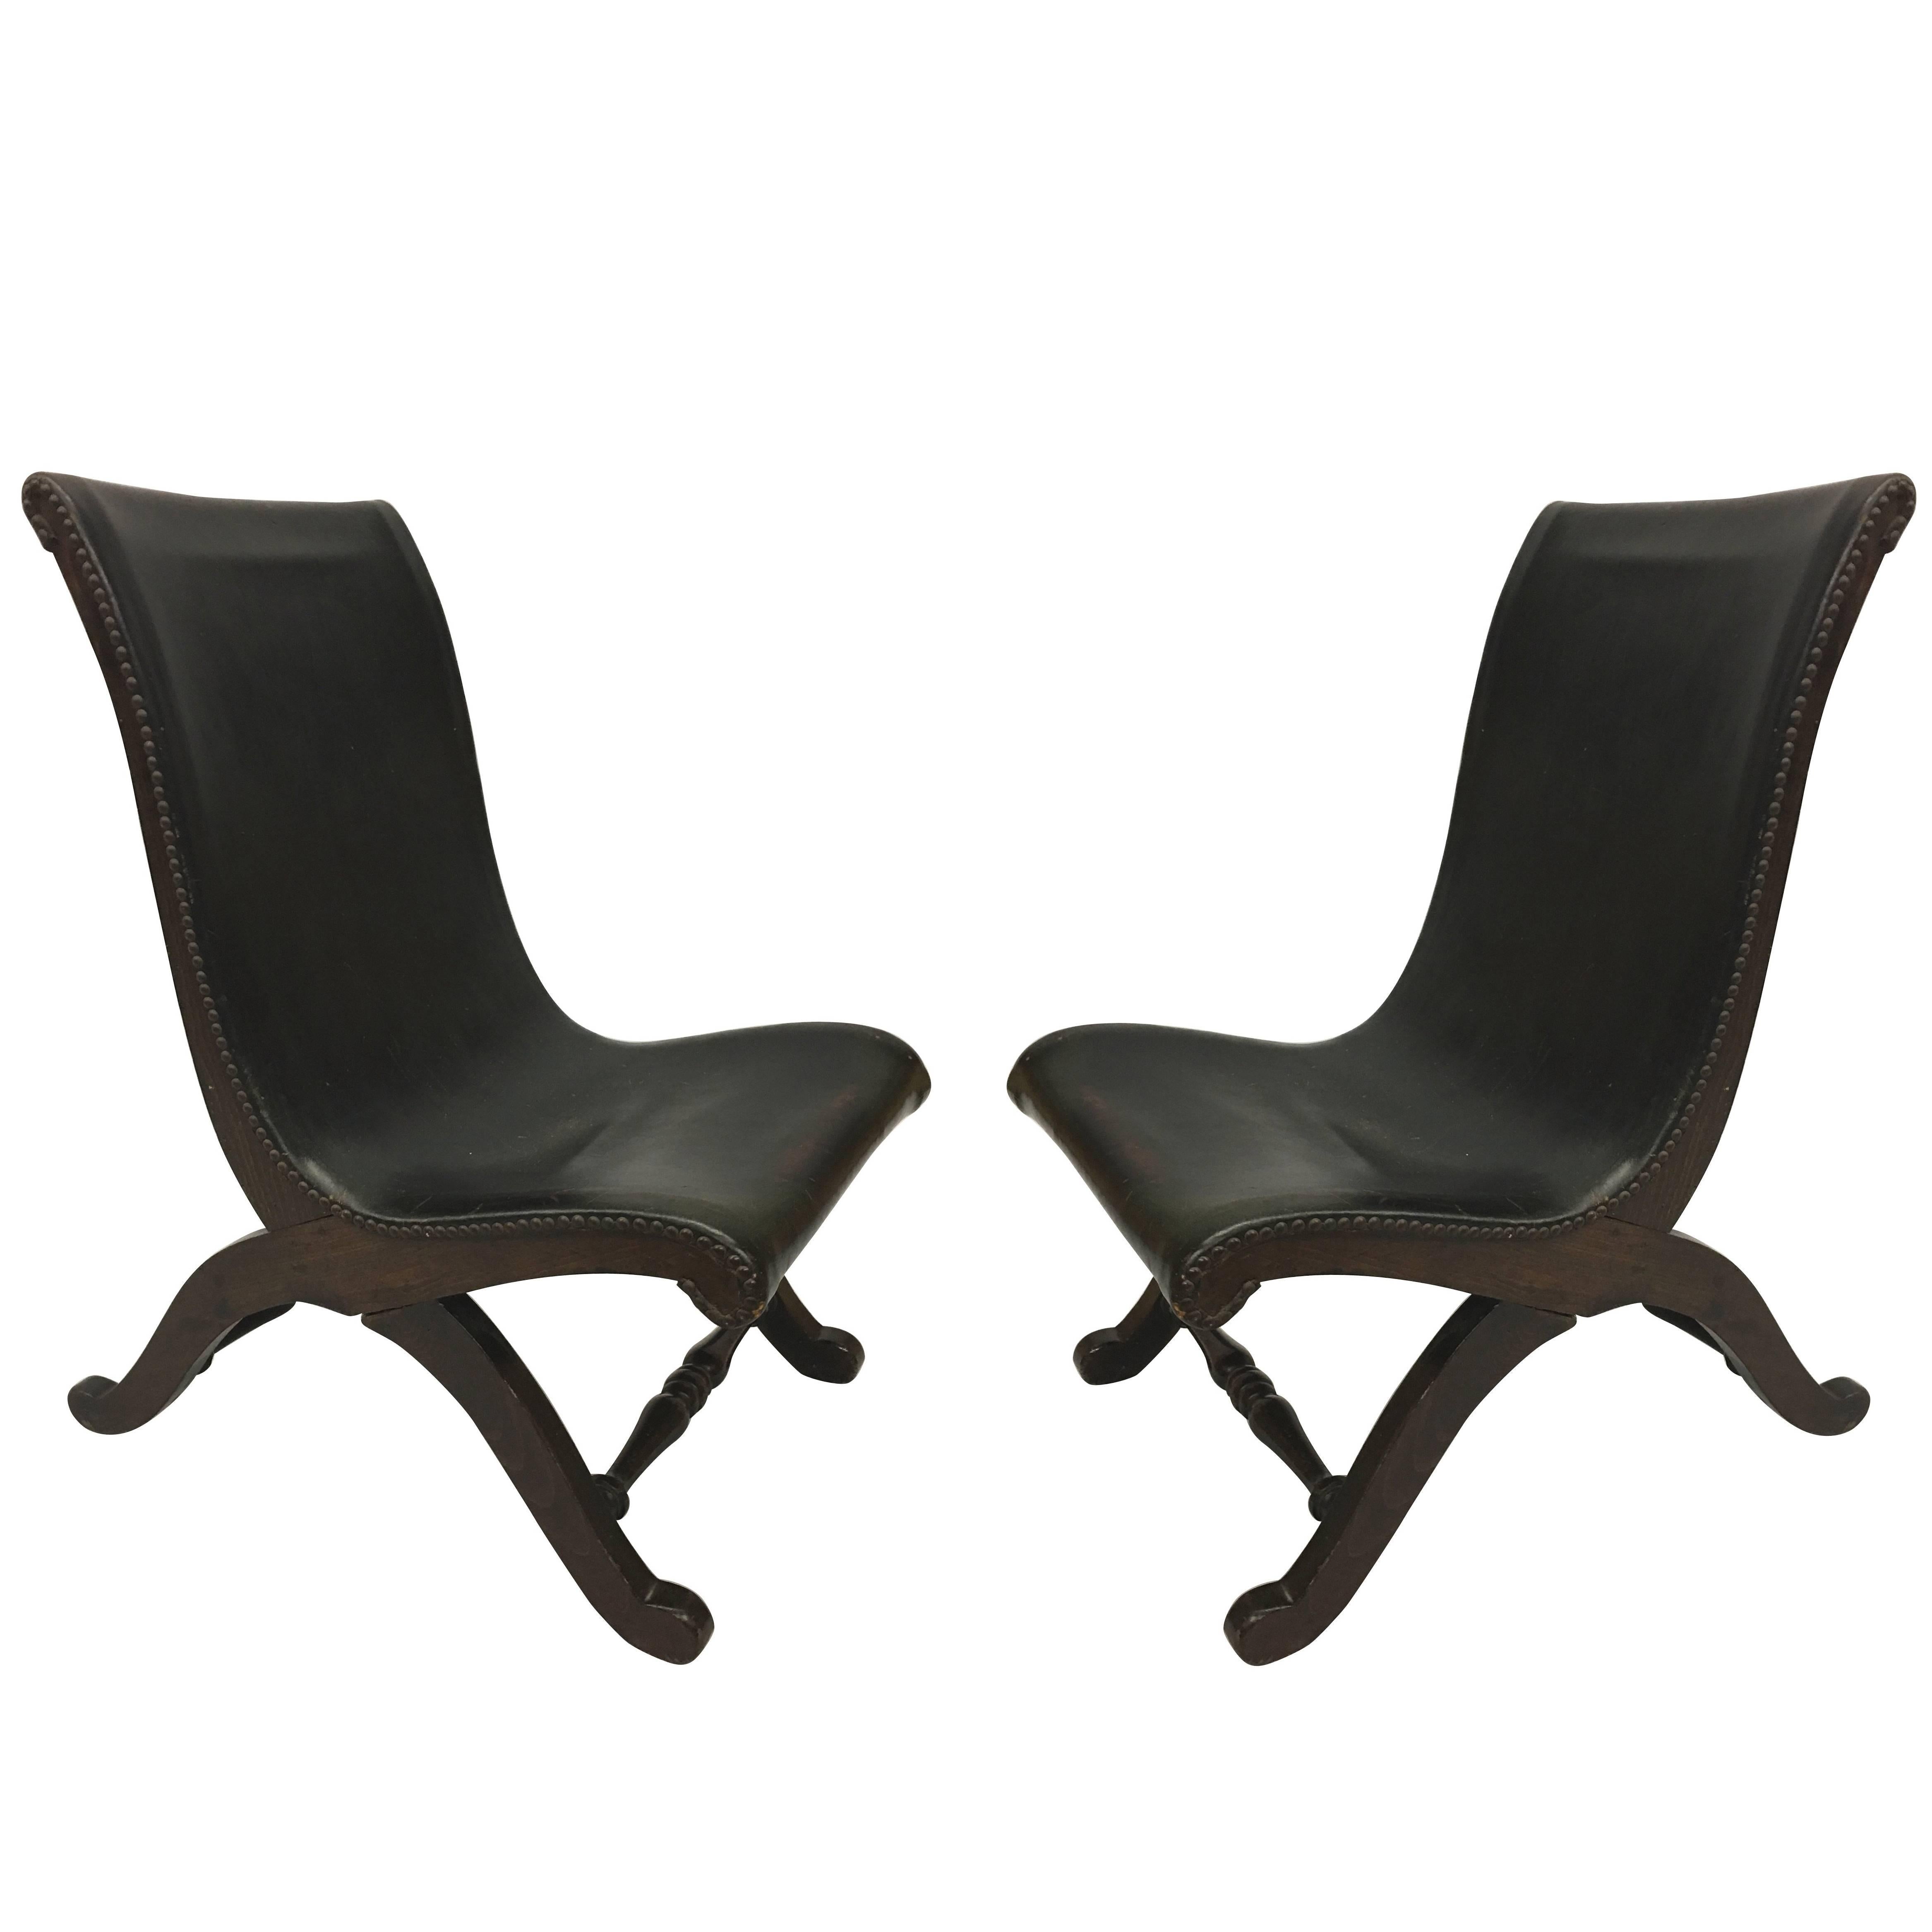 3 Mid-Century Modern Neoclassical Slipper / Lounge Chairs, Pierre Lottier, 1940 